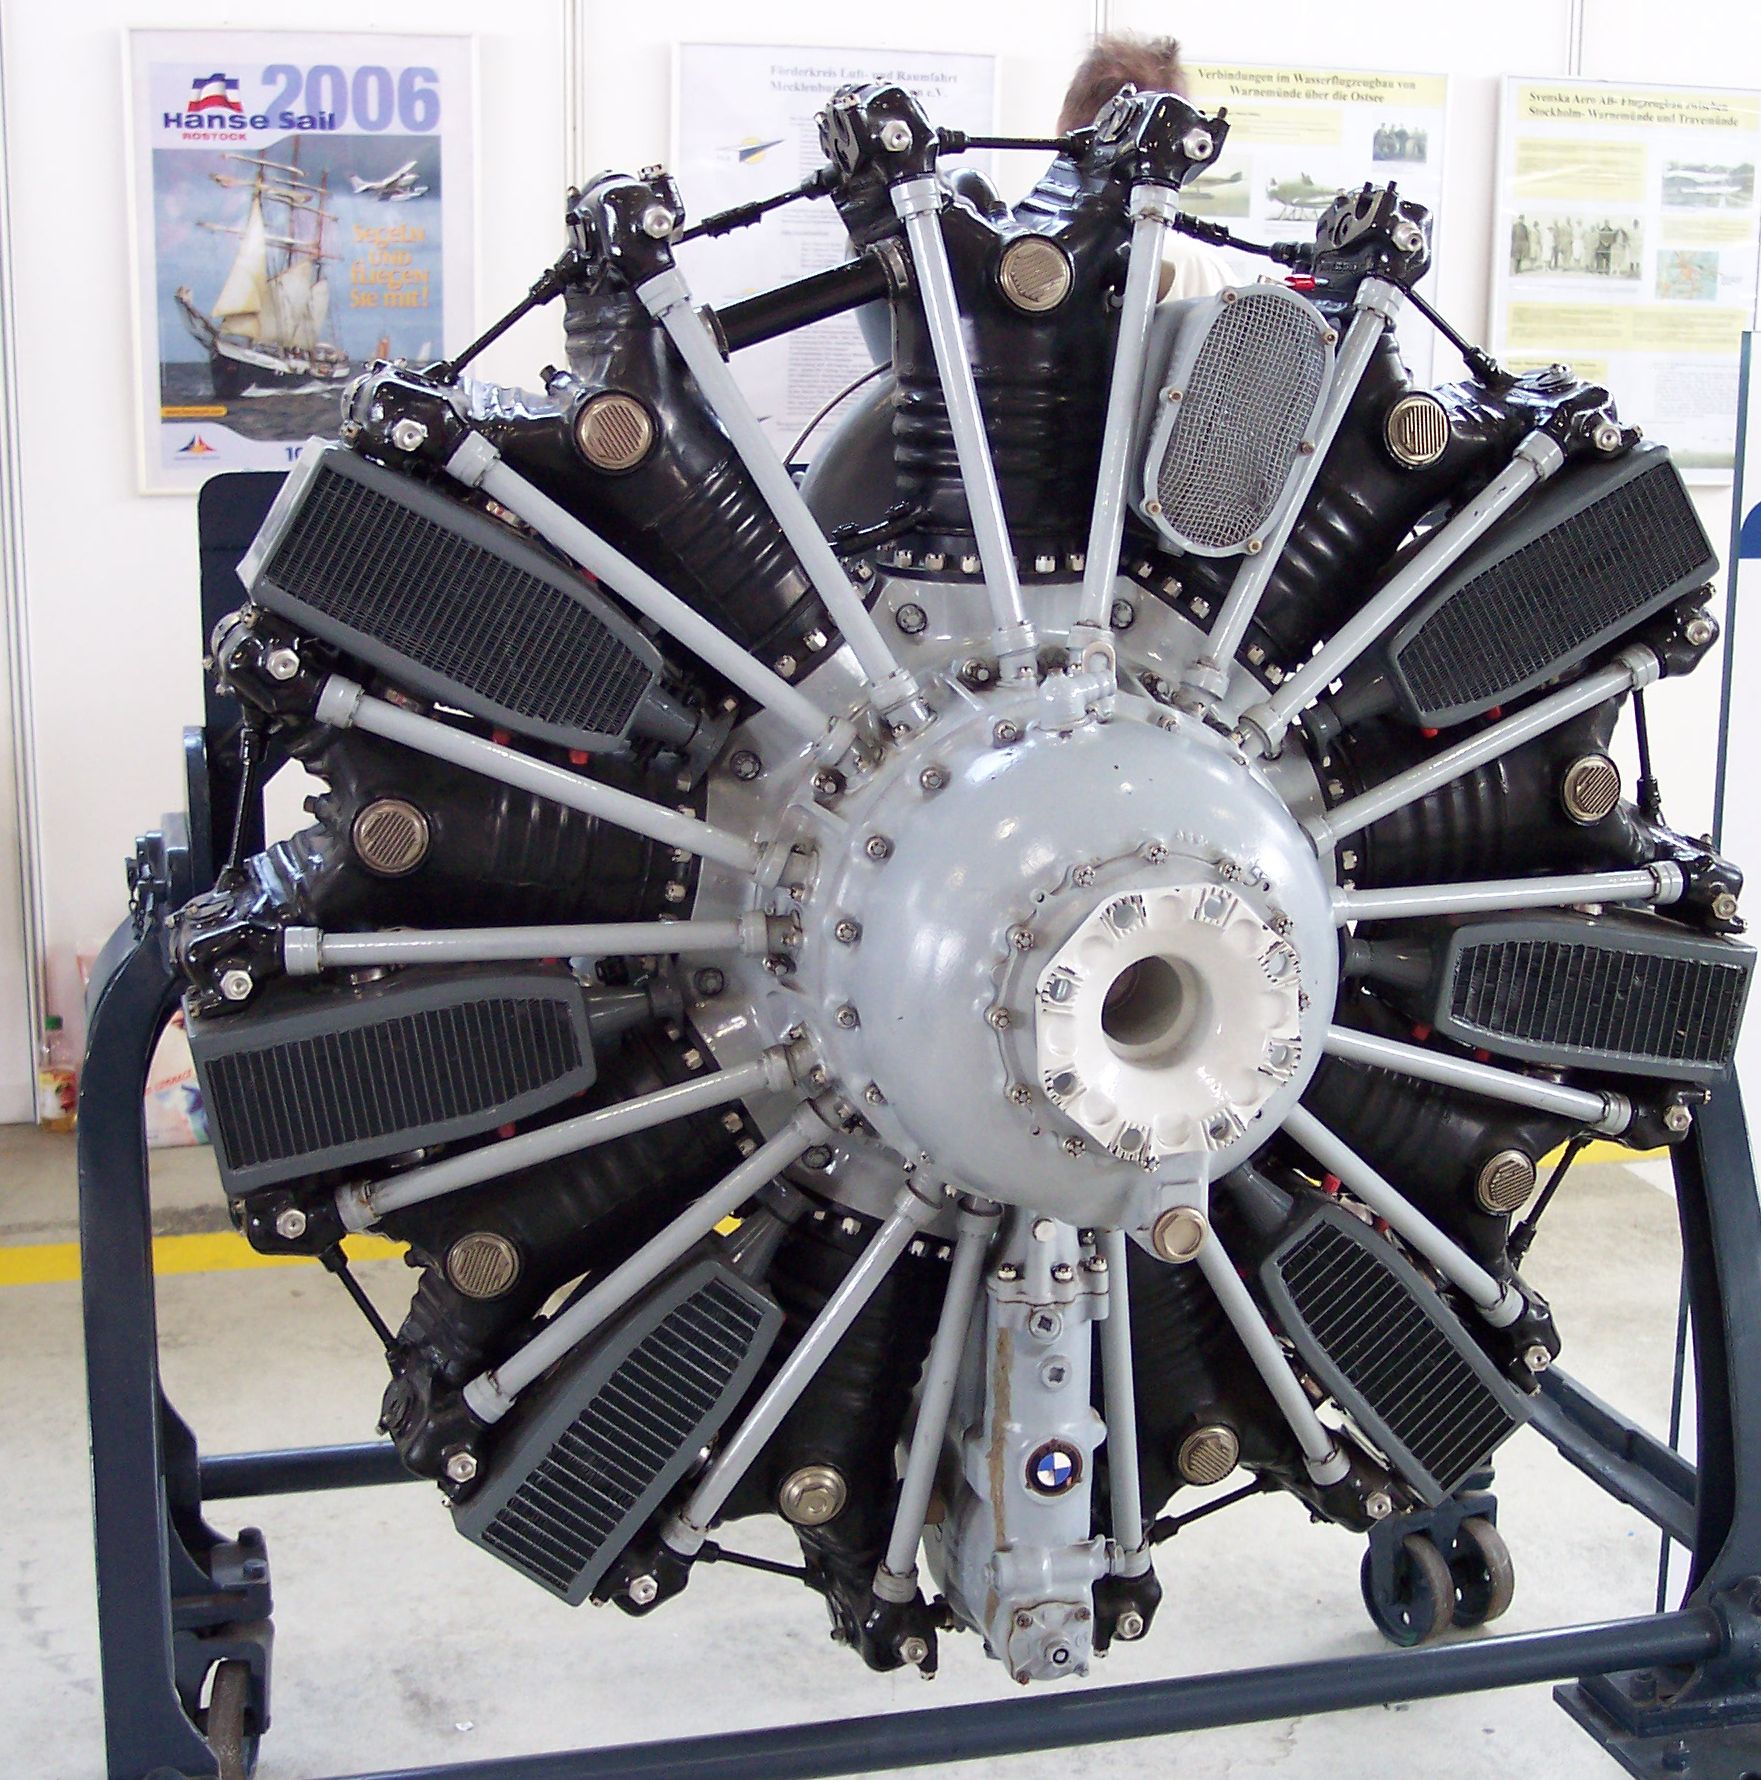 Bmw aircraft engine history #3